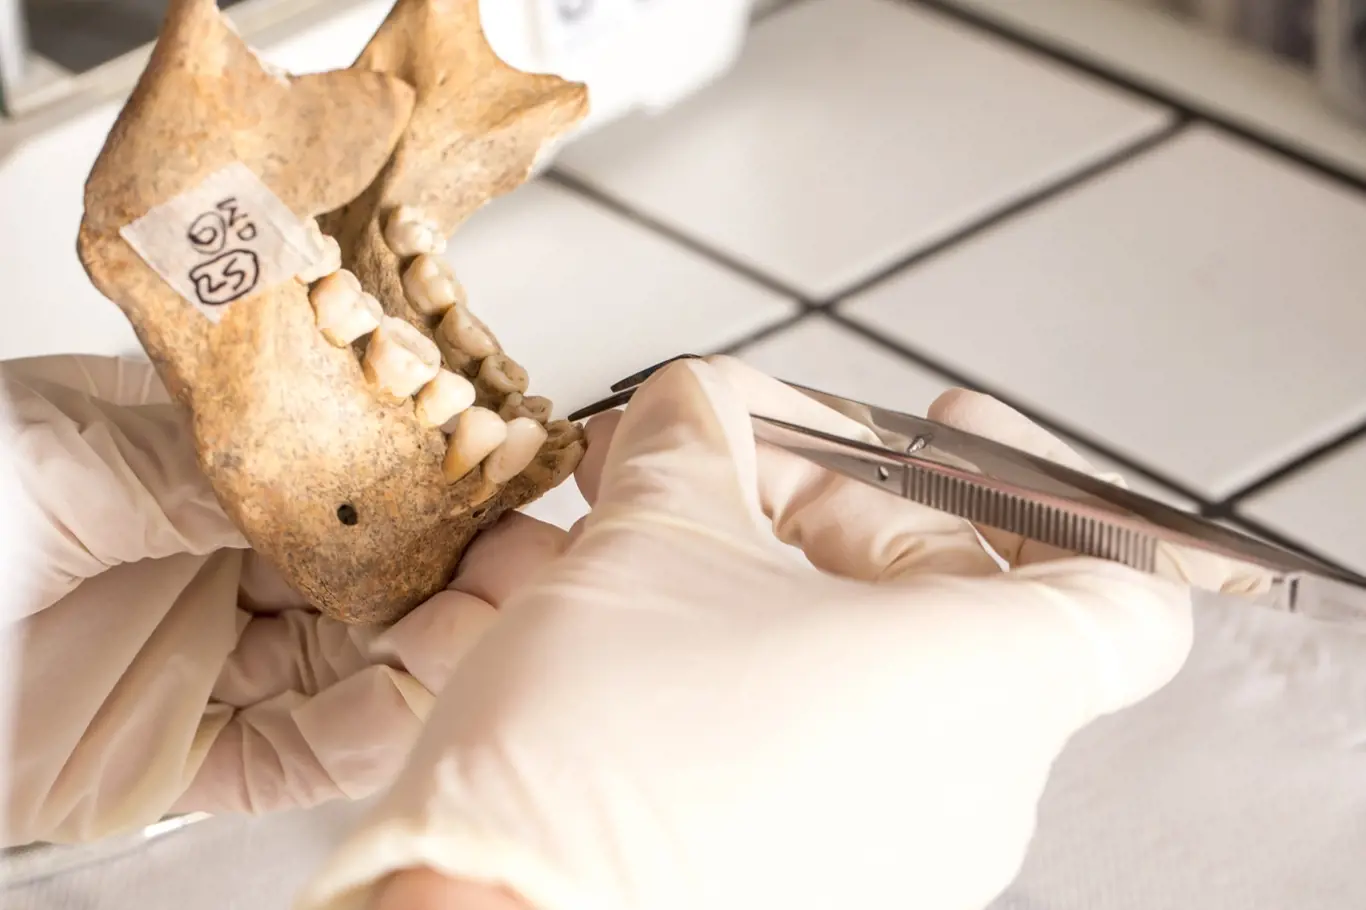 Co odhalily nalezené zuby?